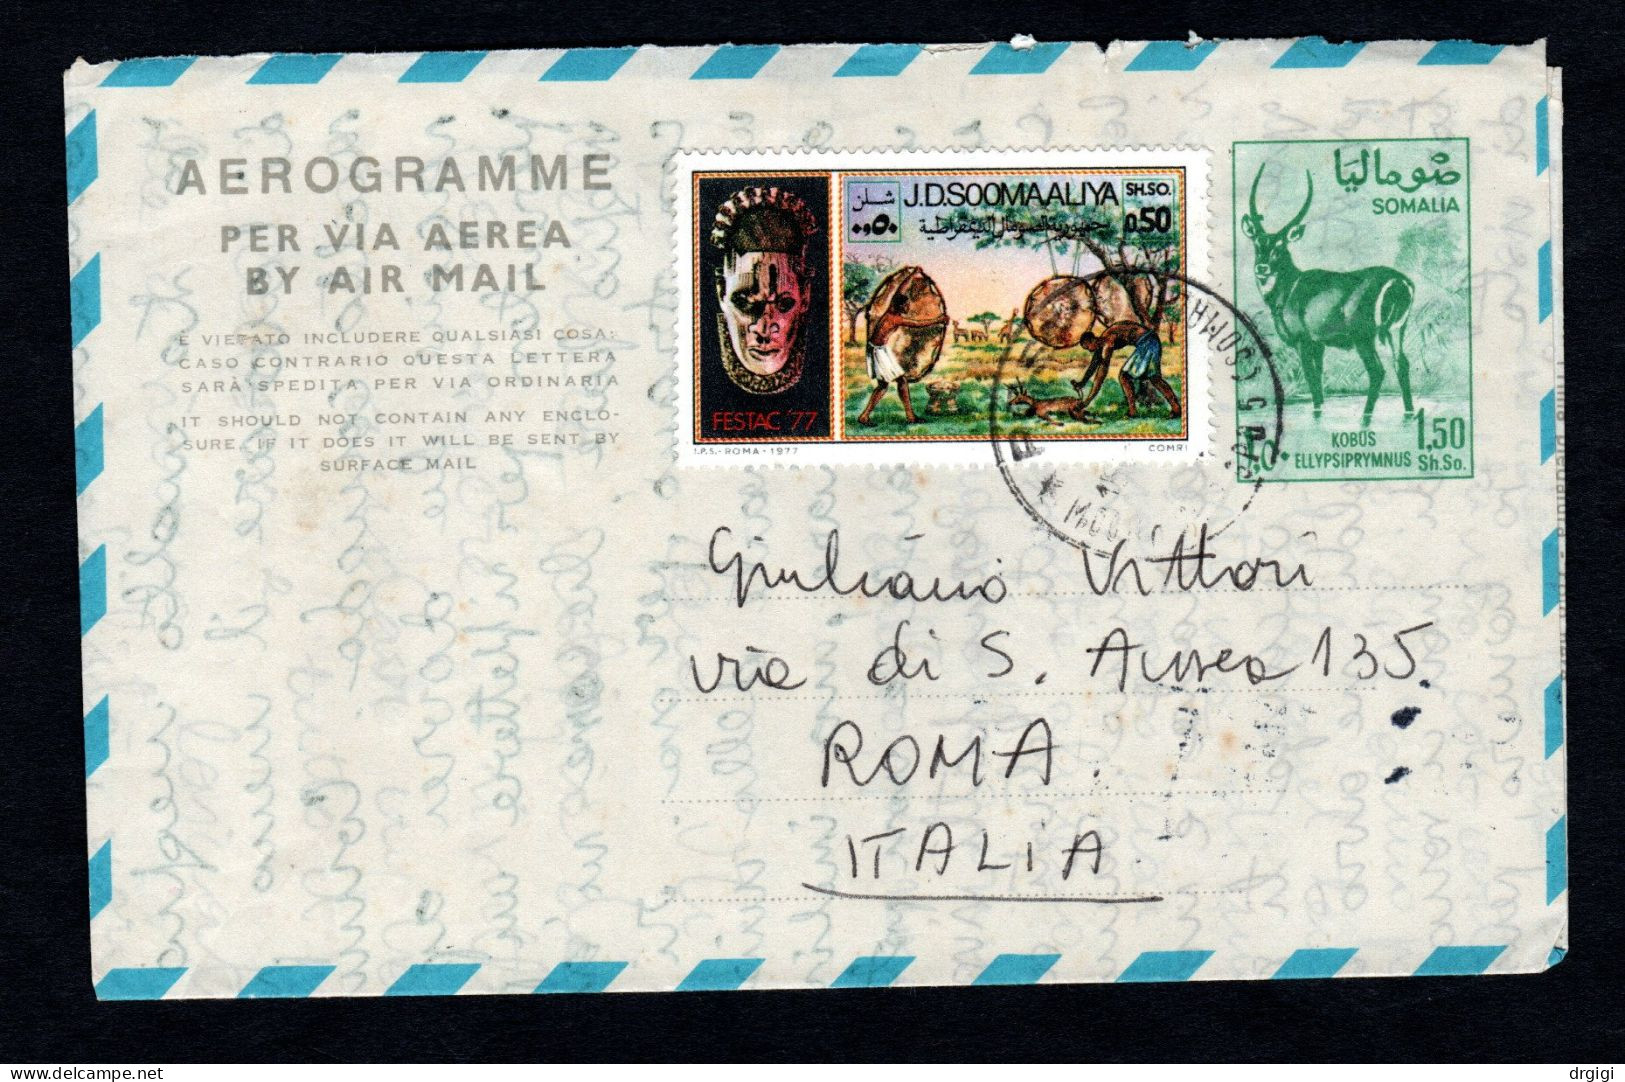 SOMALIA, 1970, INTERO POSTALE A 5 CEI, MOGADISCIO X GLI USA , AEROGRAMMA - Somalia (1960-...)